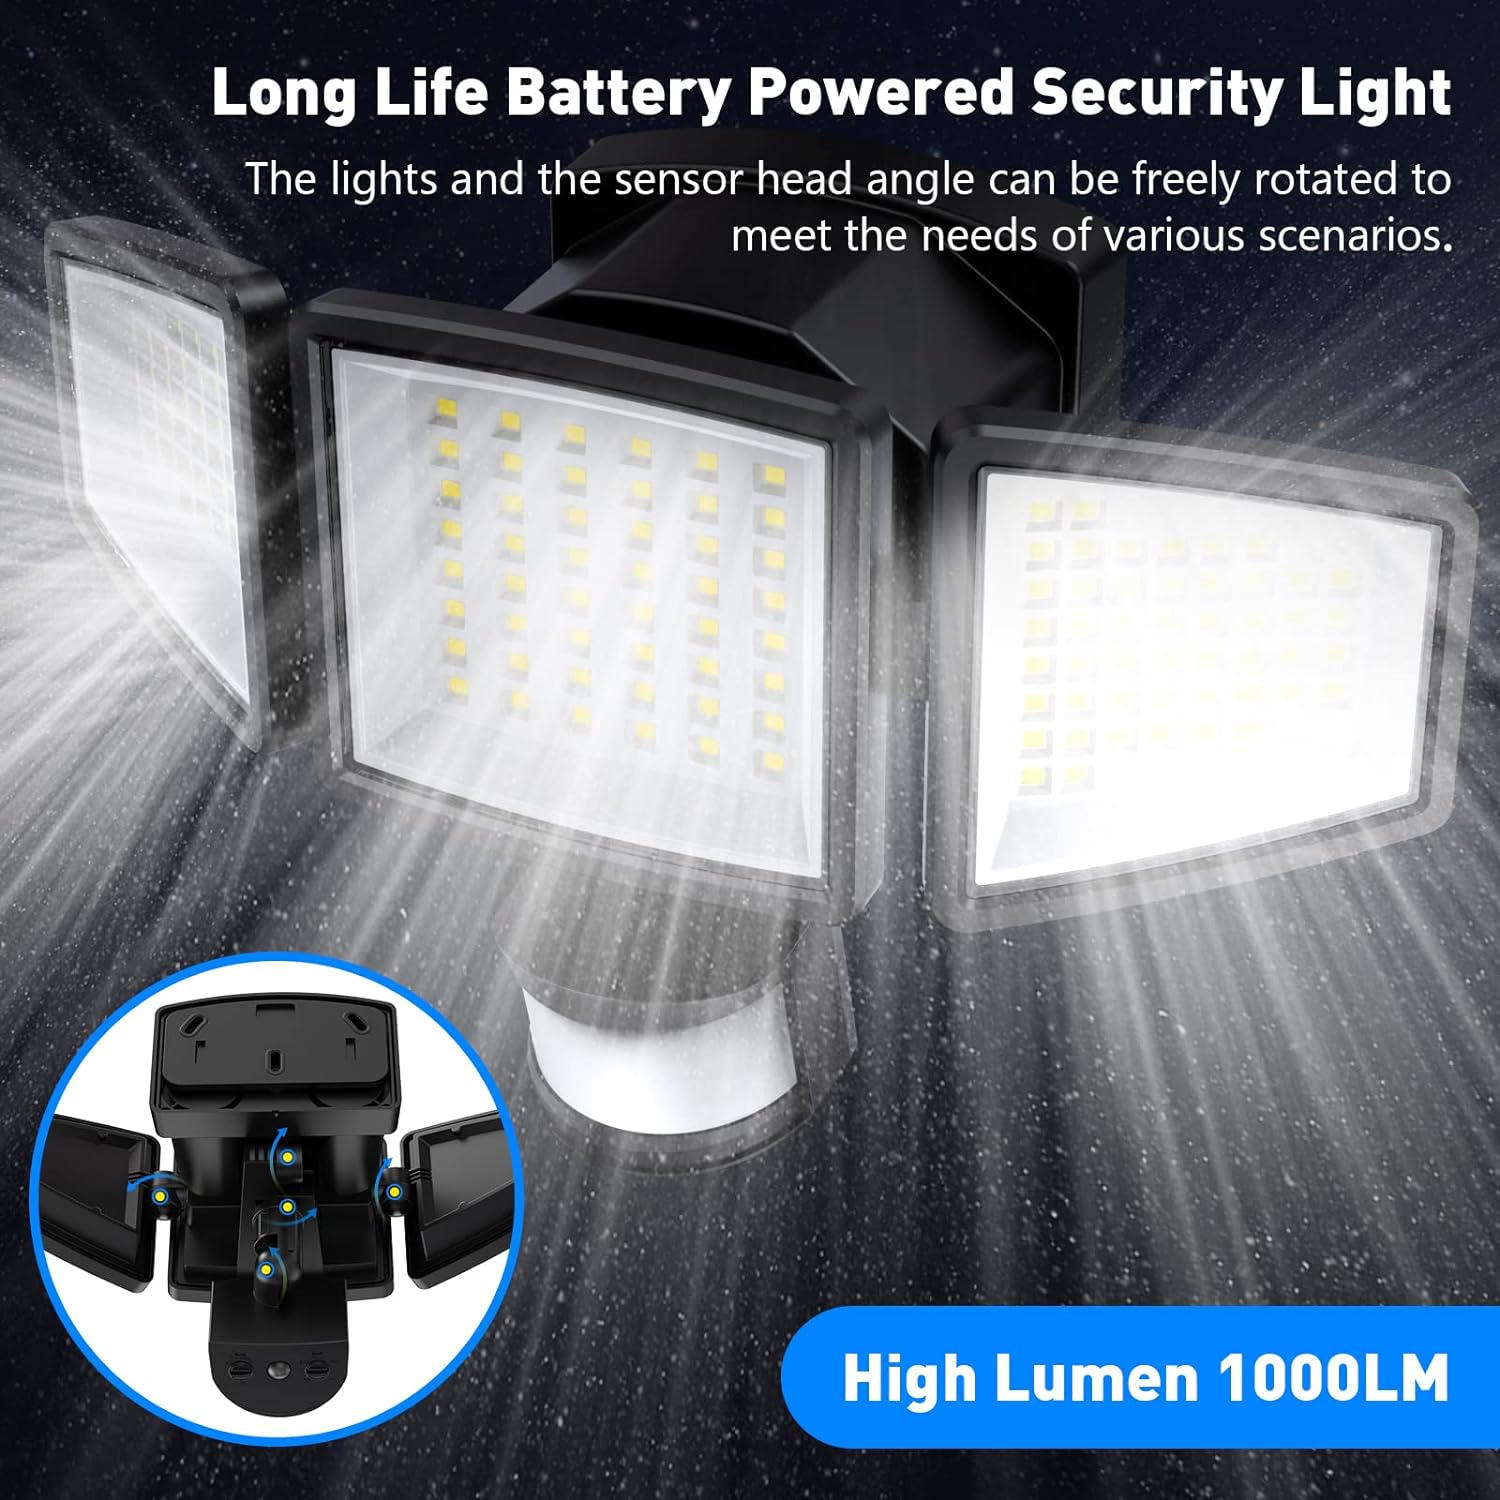 quncwl Motion Sensor Outdoor Lights Battery Powered - 1000LM Battery Operated LED Security Light - 5000K Flood Lights IP65 Waterproof